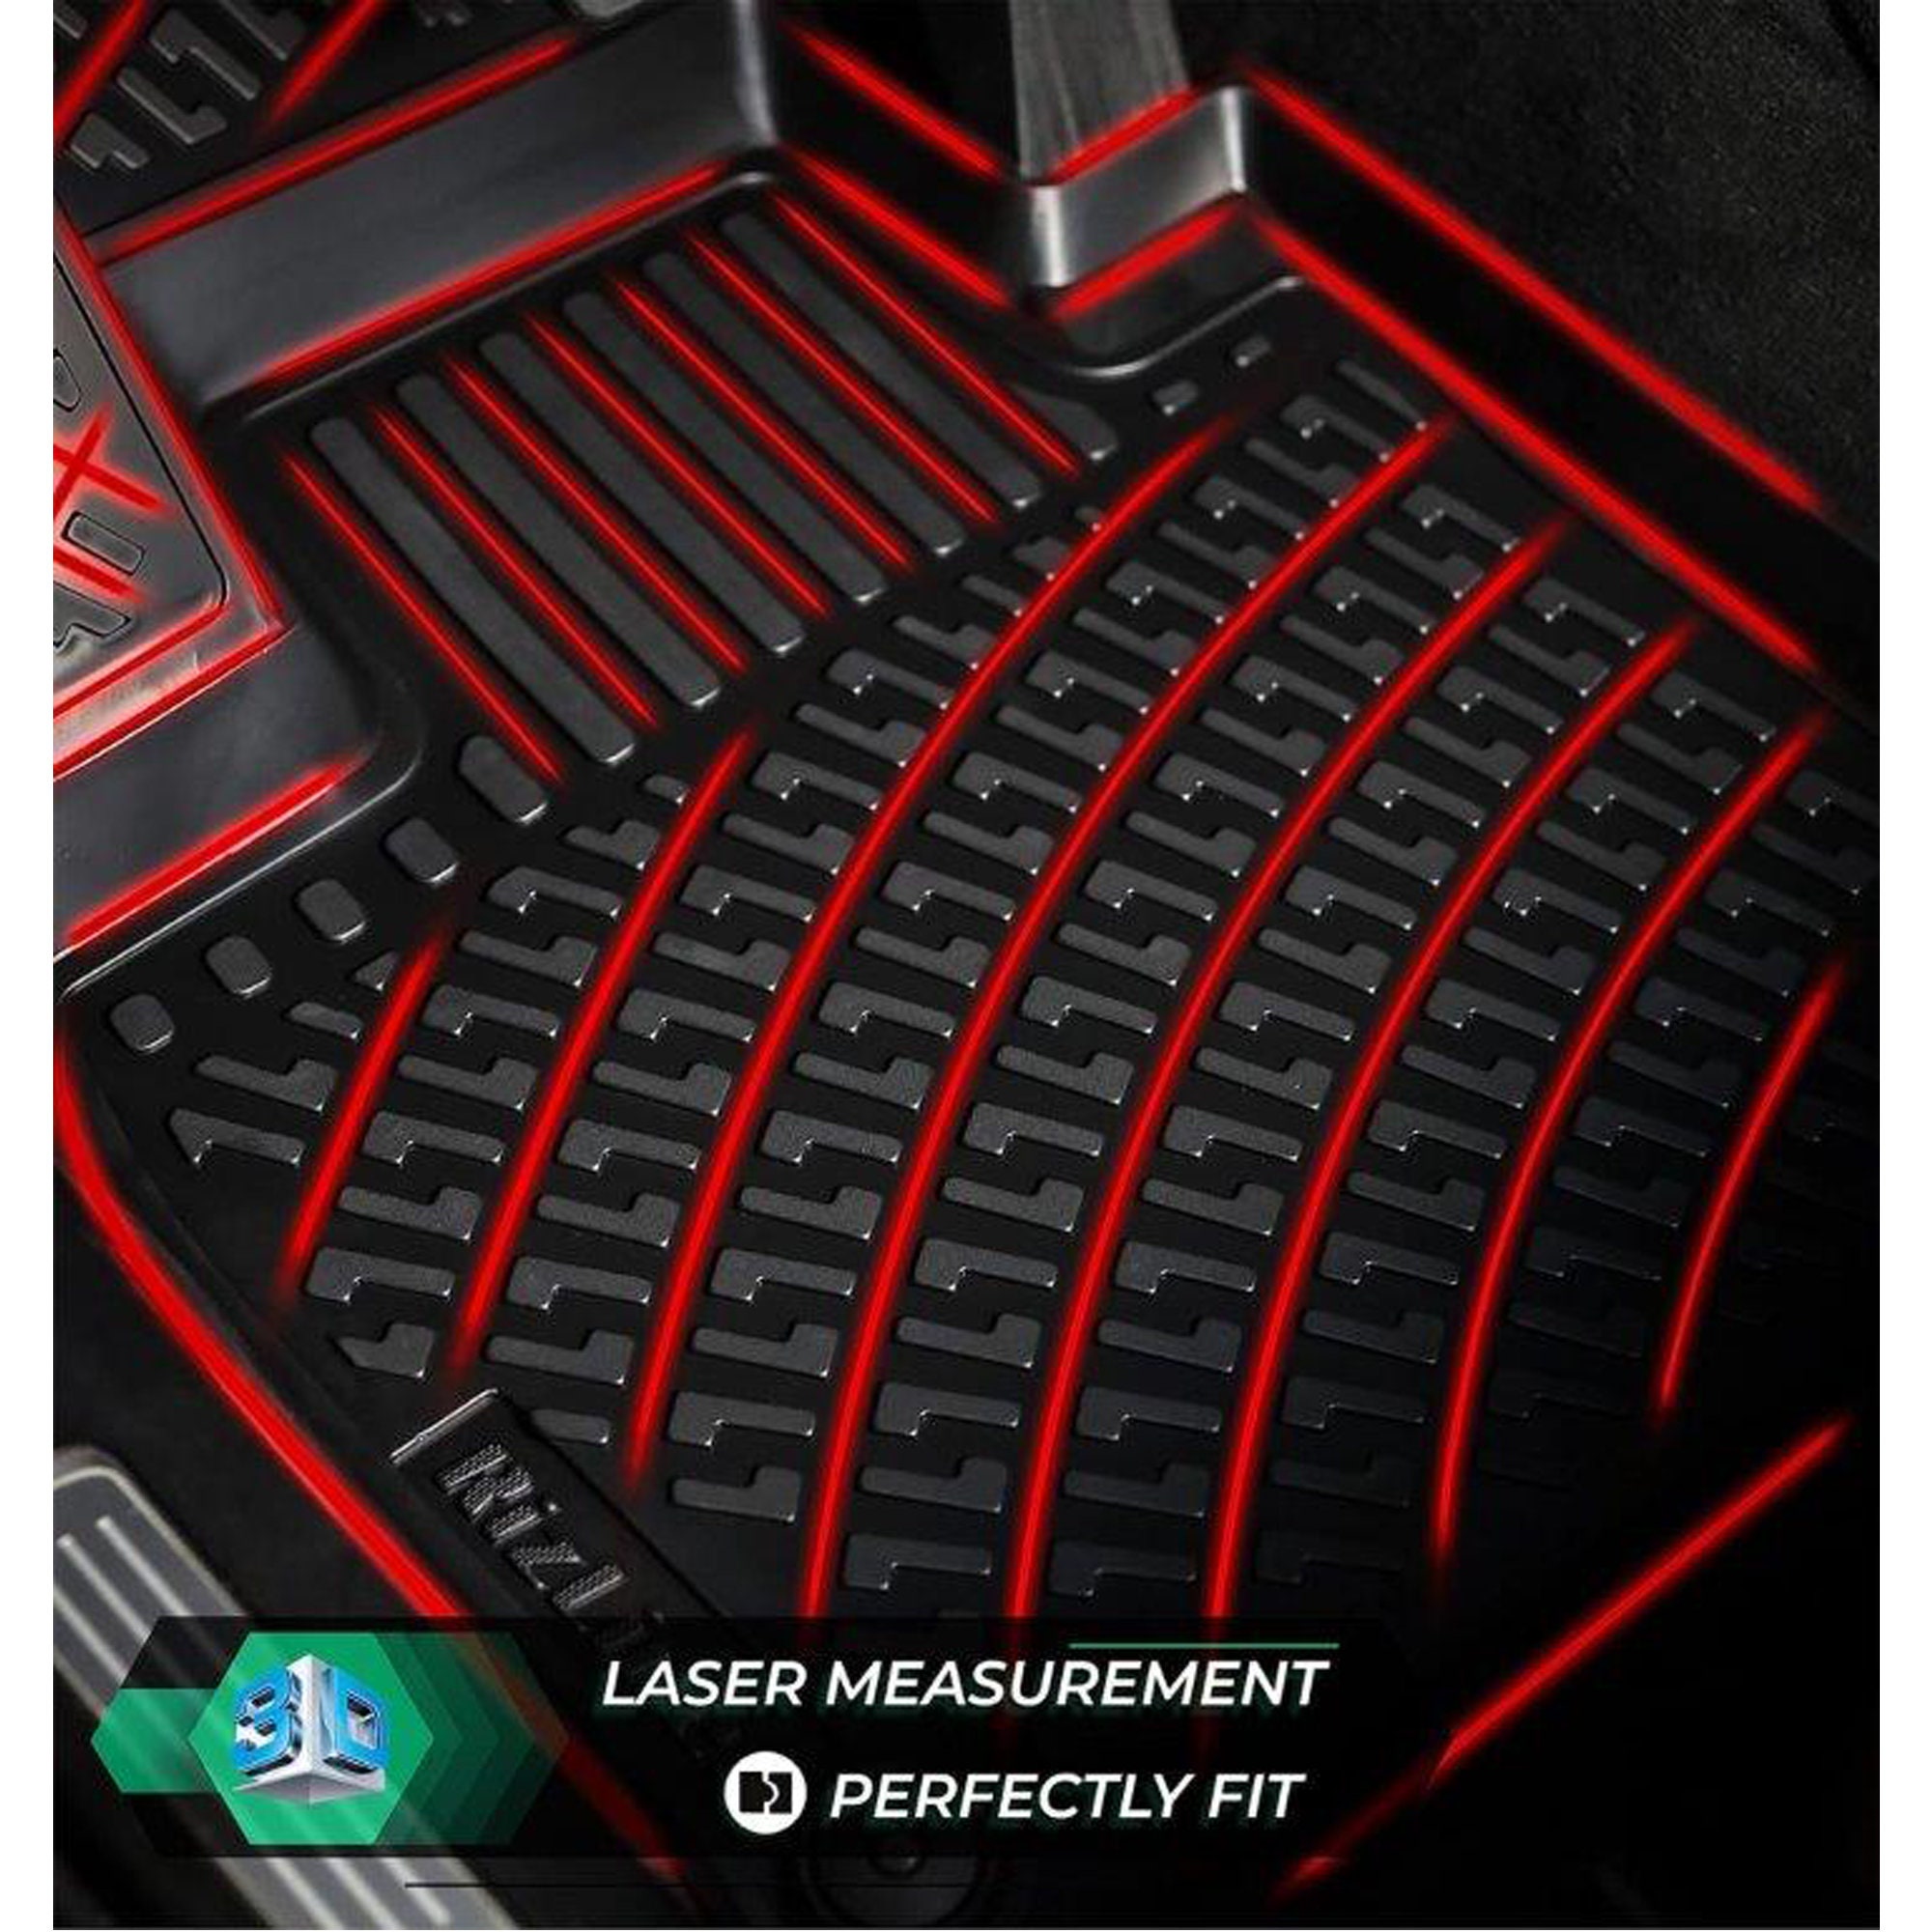 Fits Chevrolet Captiva 2006-2018 Floor Mats Front & Rear All Wheather  Custom Fit Floor Liner 3D Waterproof Black Molded 4X - Etsy